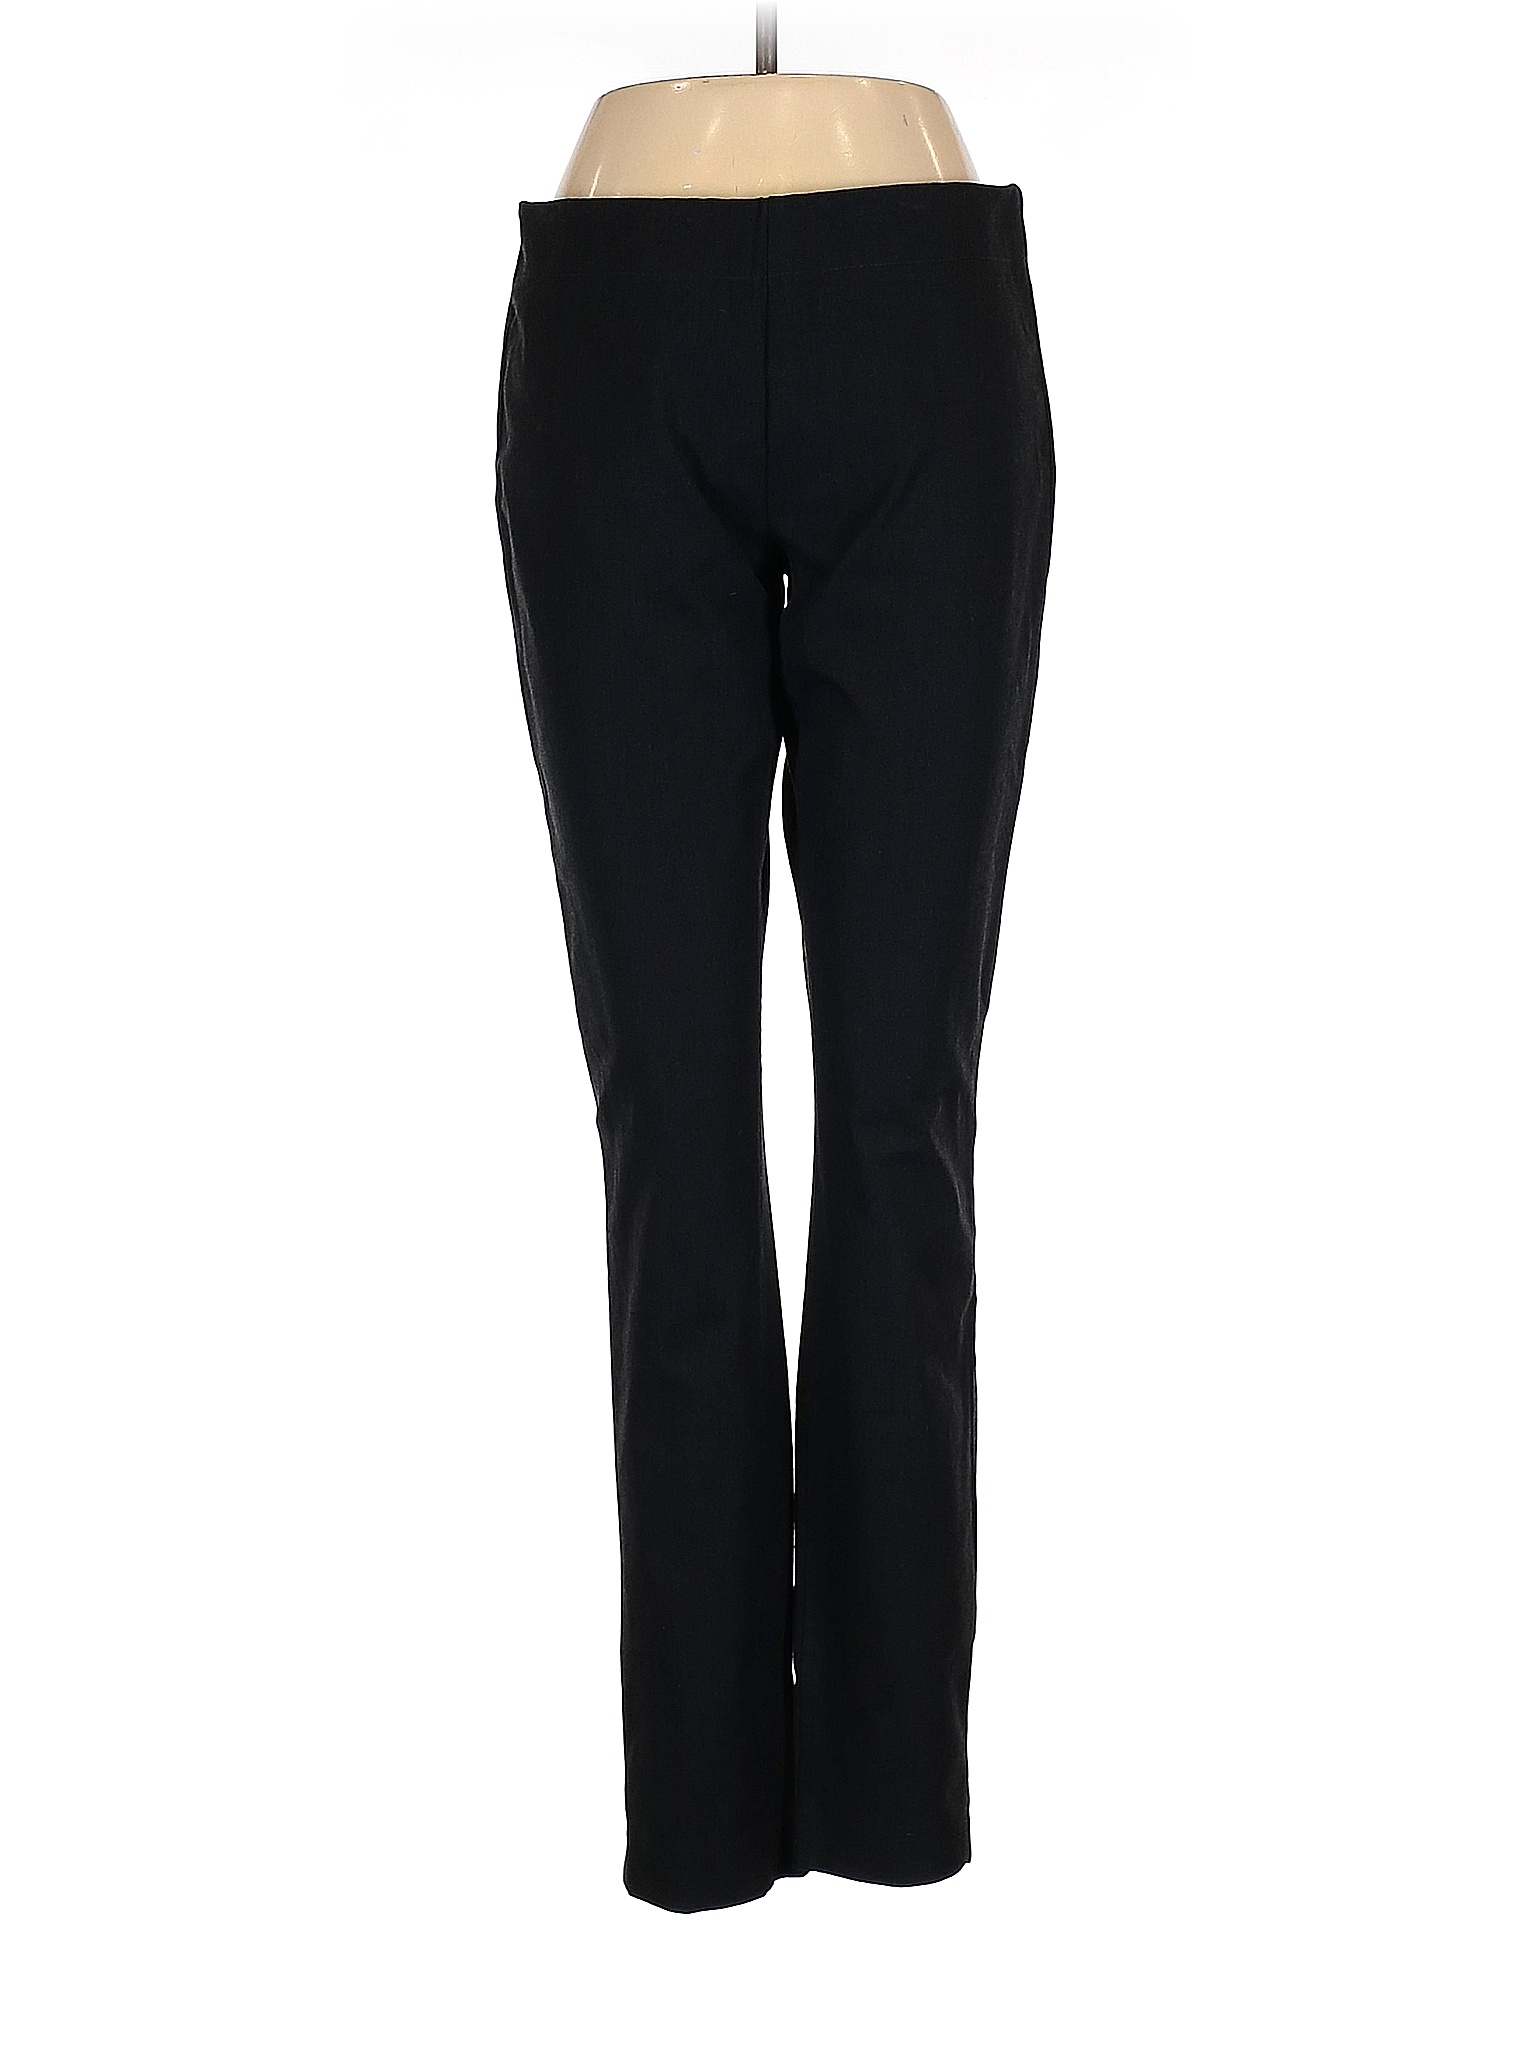 Ecru Colored Black Dress Pants Size 4 - 90% off | thredUP